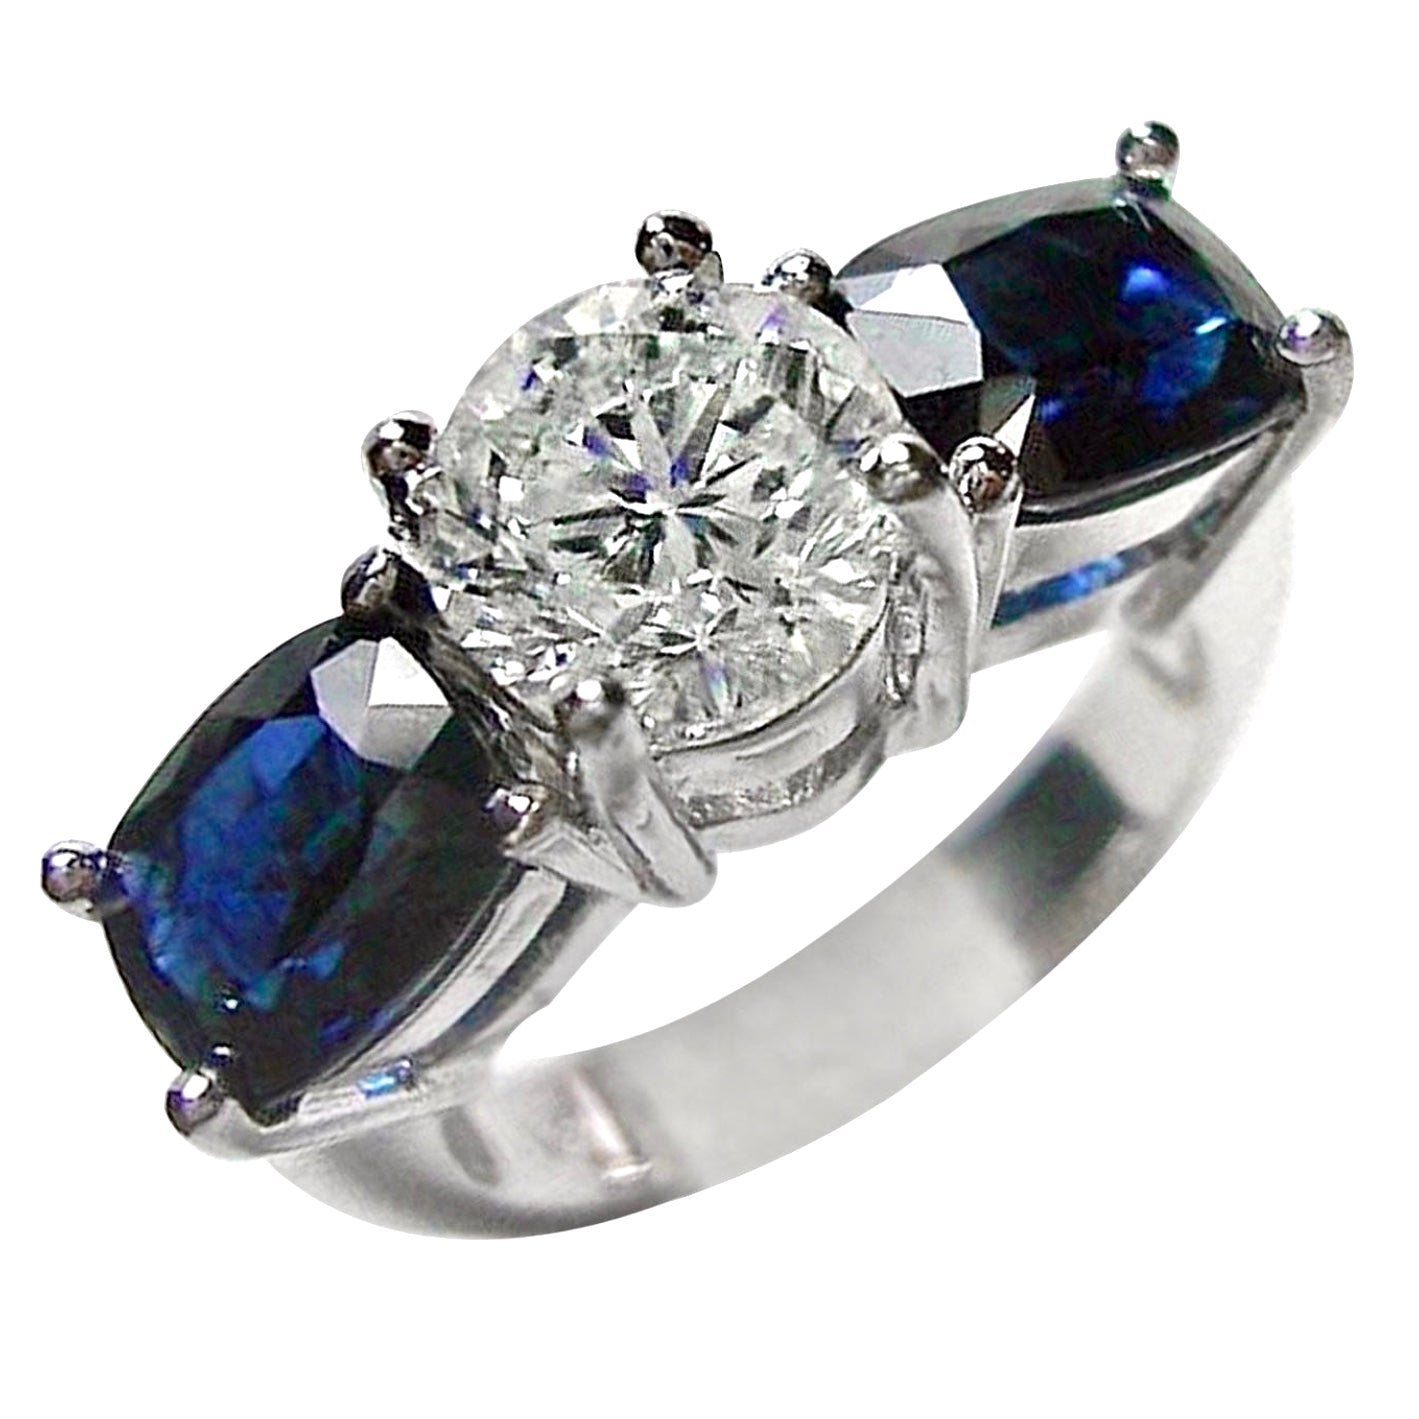 Oceanic Beauty of Sapphire Engagement Rings | Gabriel Blog